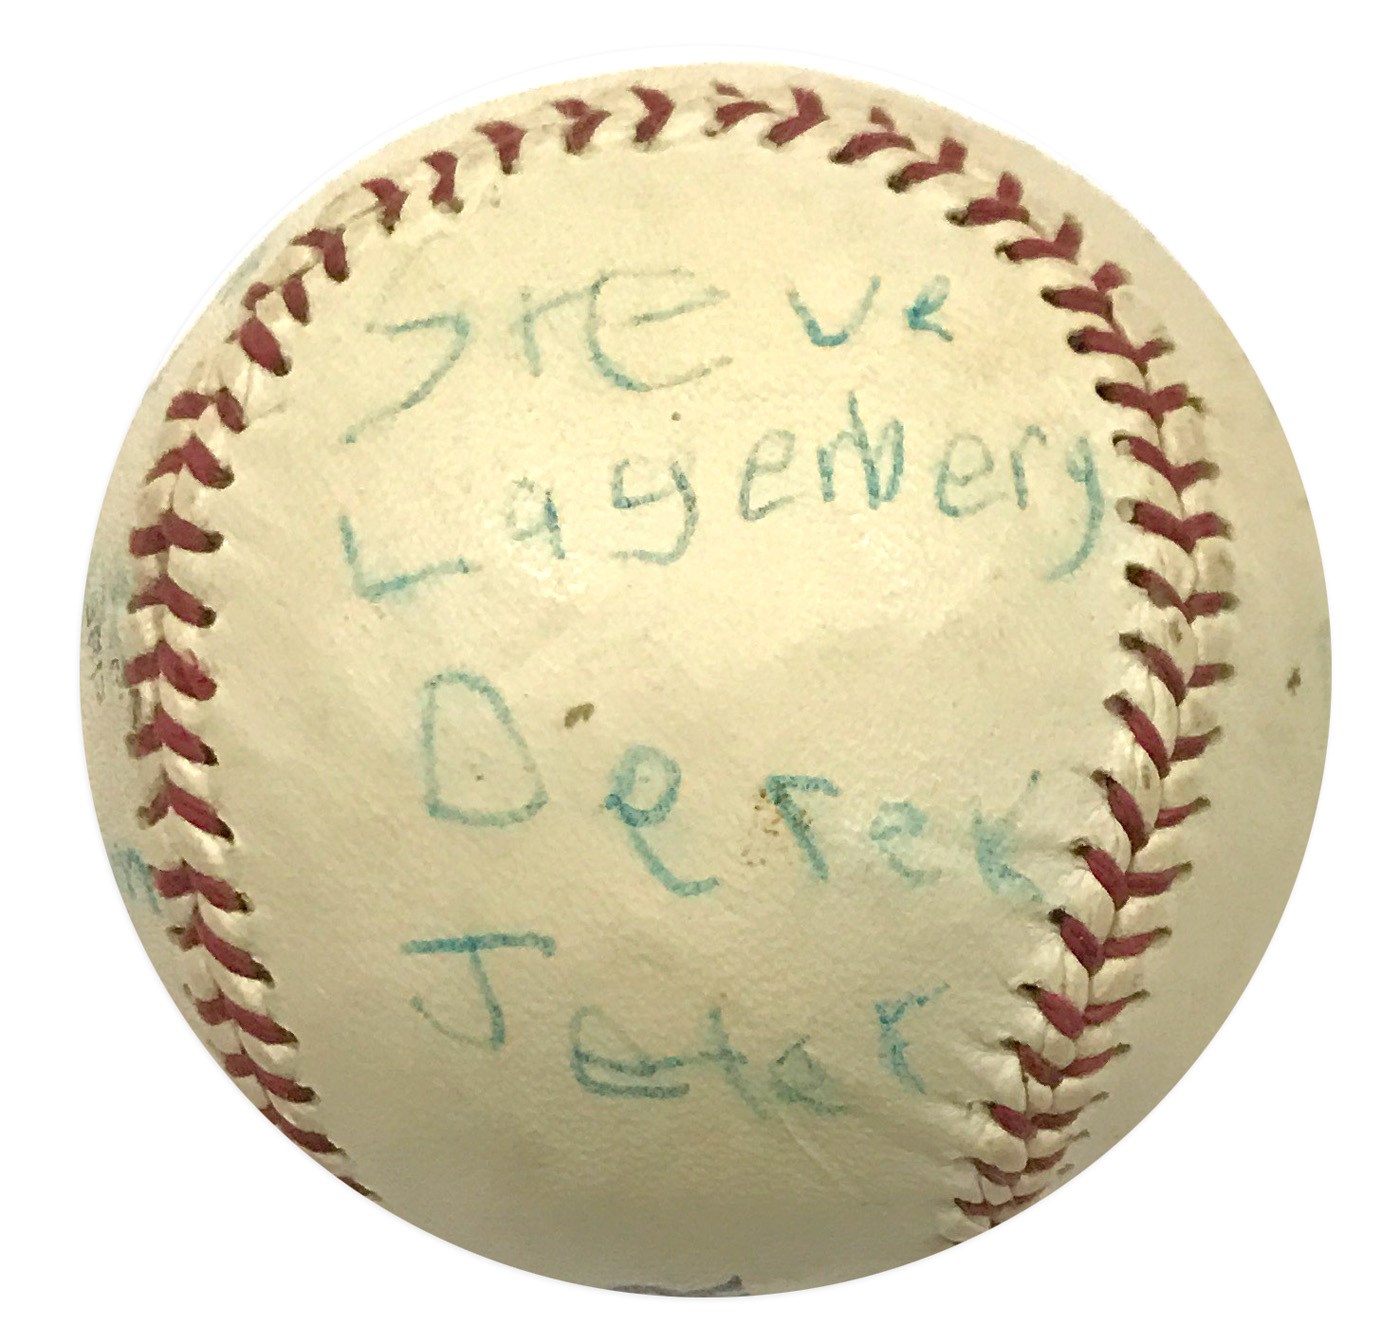 - 1982 Derek Jeter Signed Little League Baseball w/ Impeccable Provenance